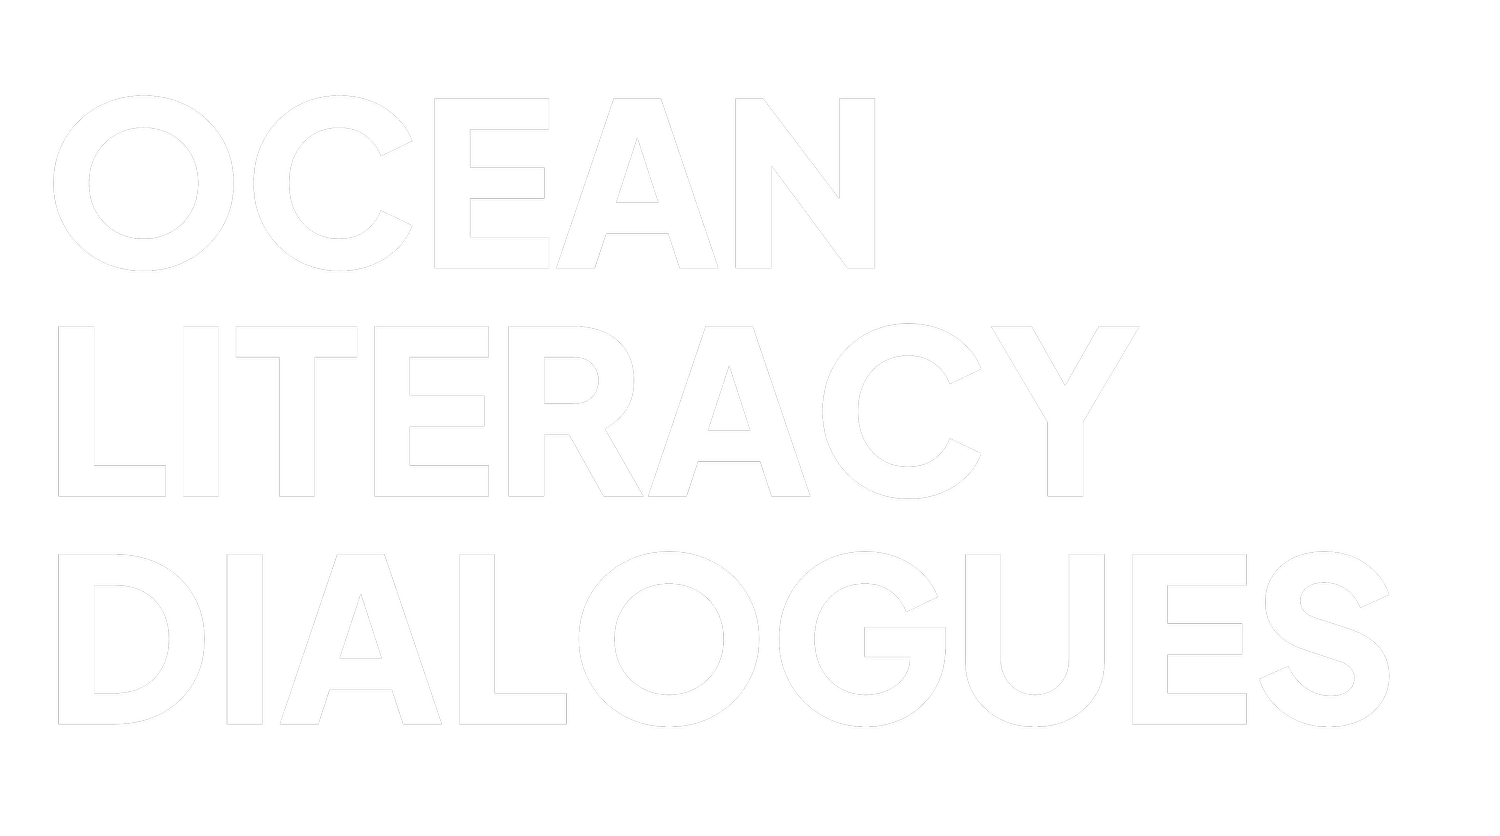 OCEAN LITERACY DIALOGUES